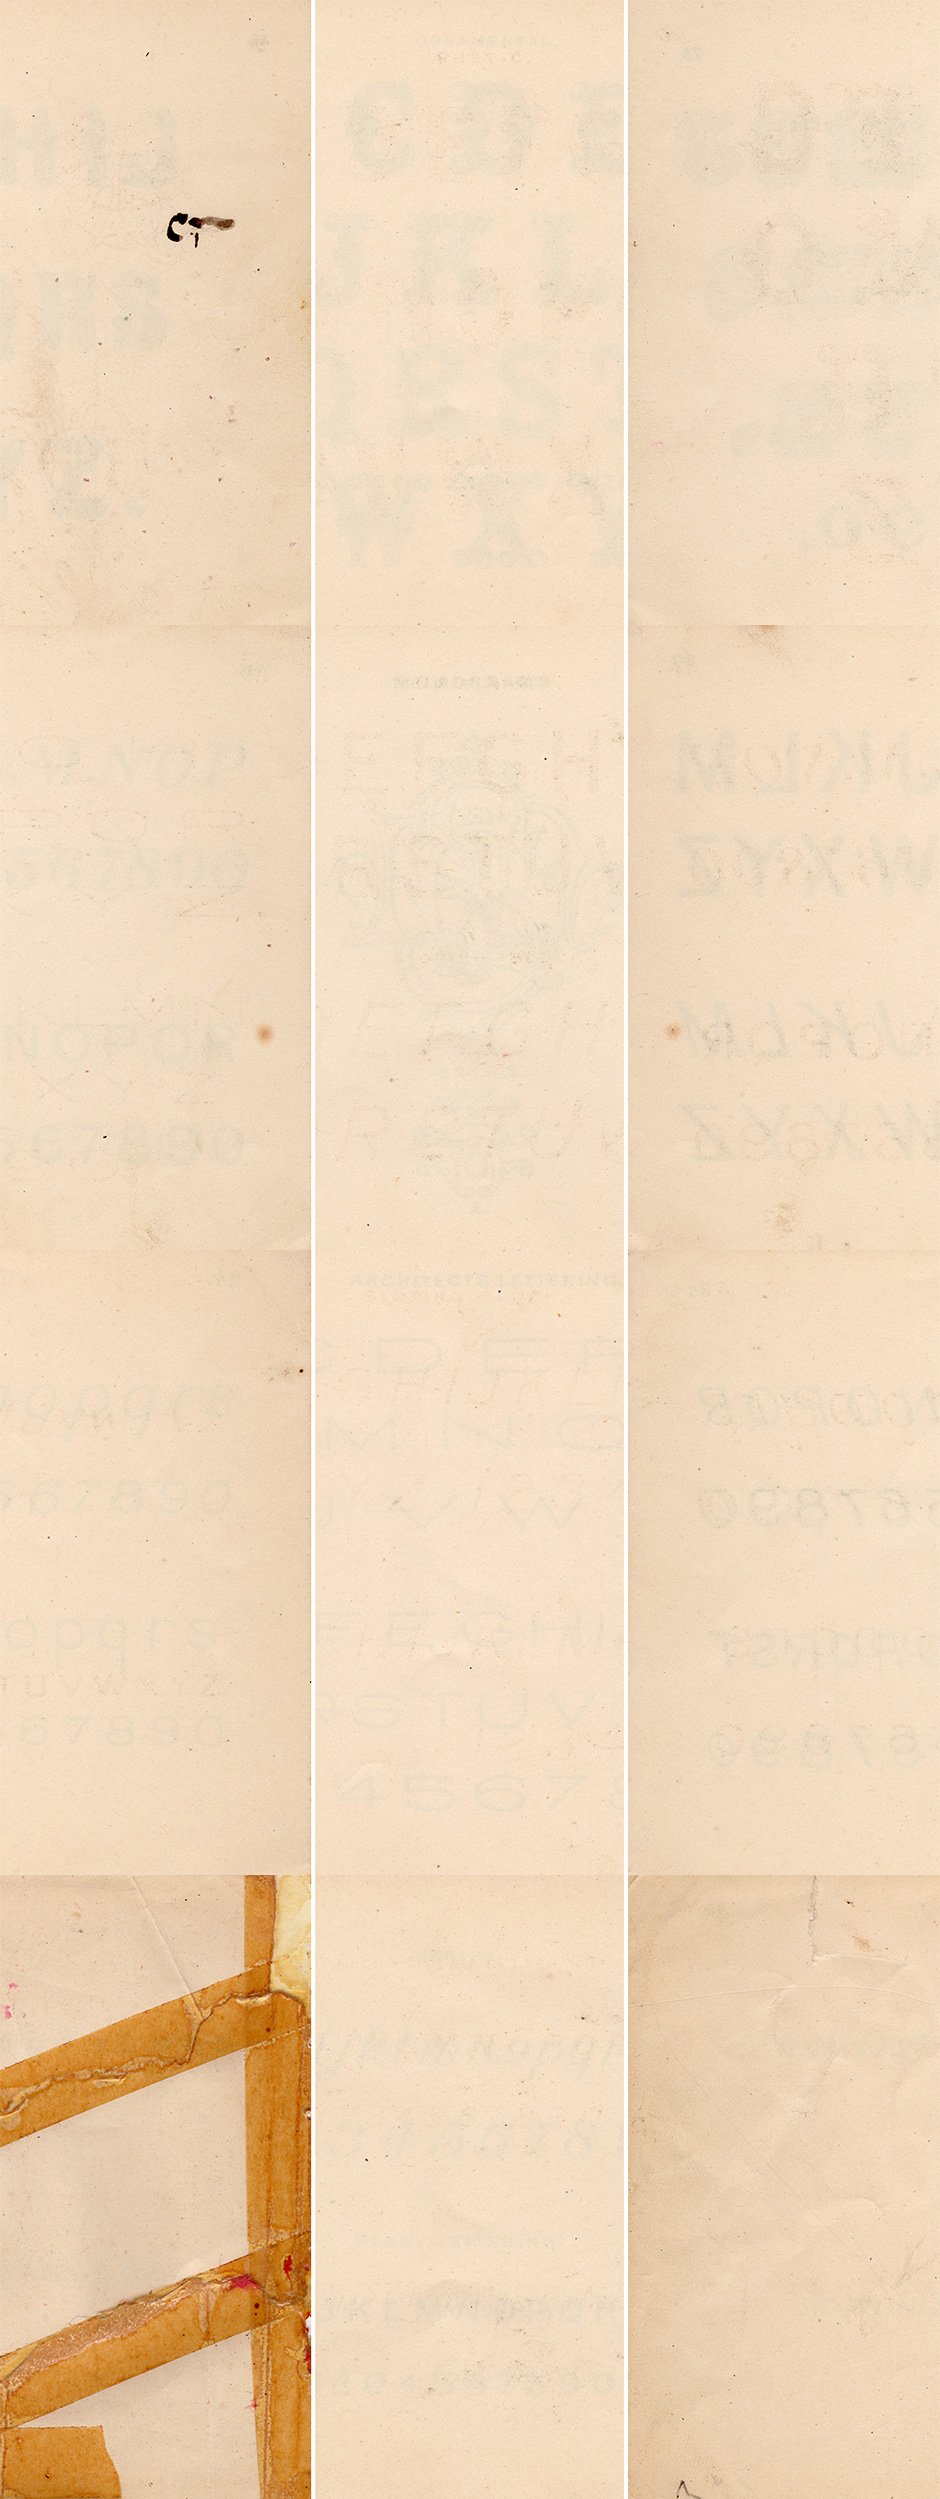 Vintage Paper Textures Vol. 3